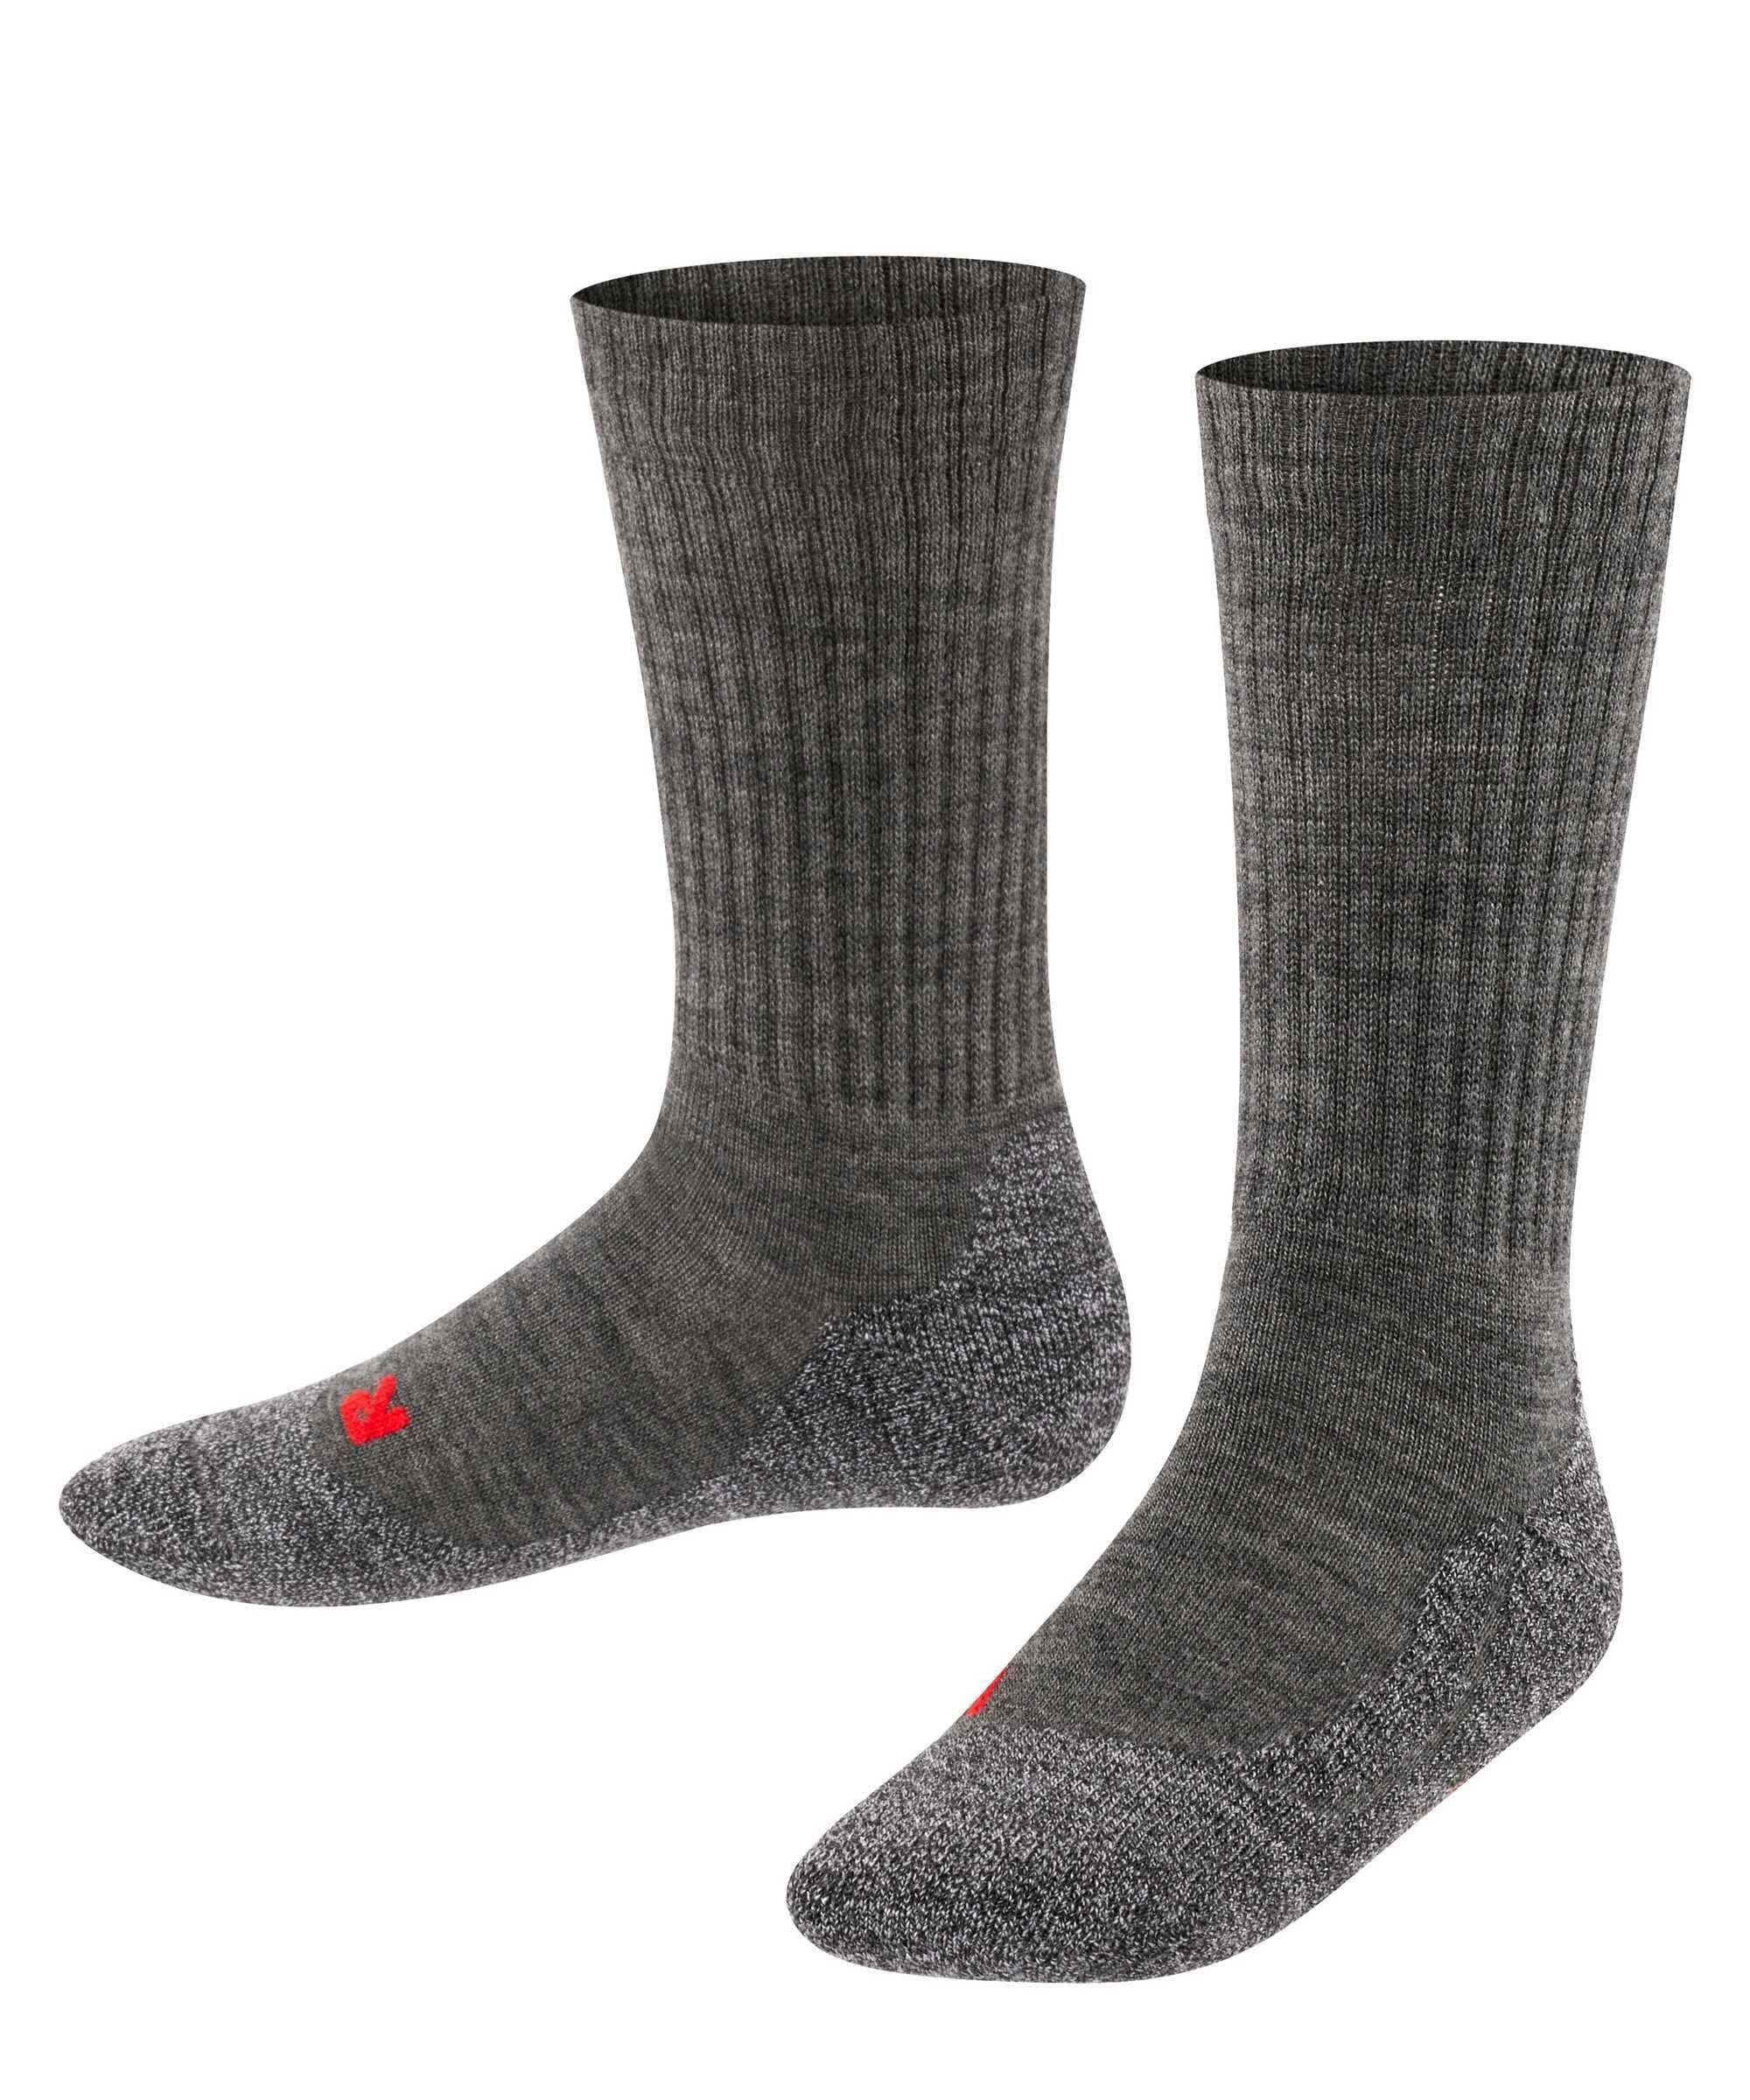 FALKE Freizeitsocken Kinder Socken - Kurzsocken Warm, Grau Active